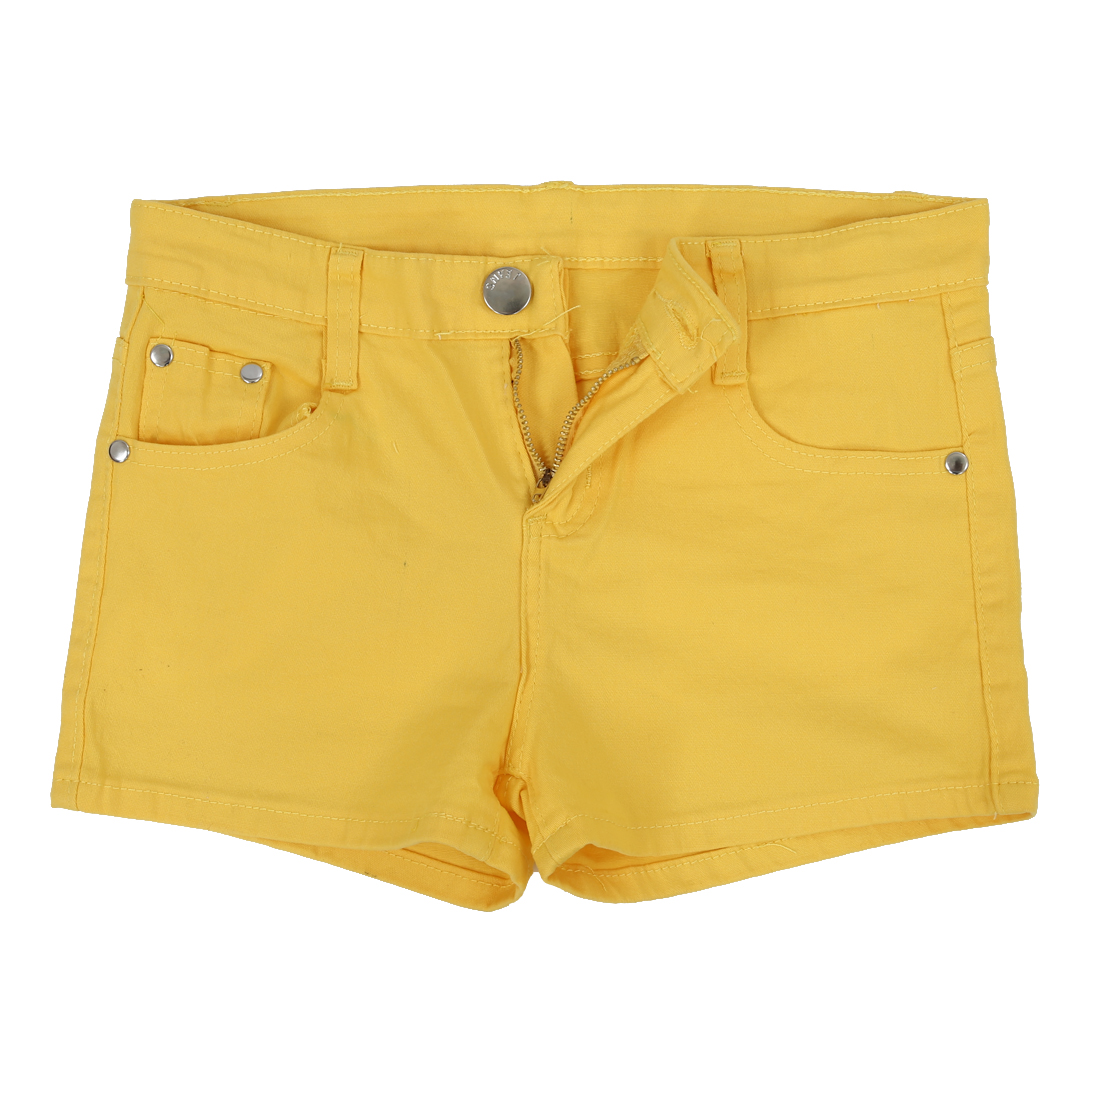 yellow shorts yellow short shorts NZCKULD